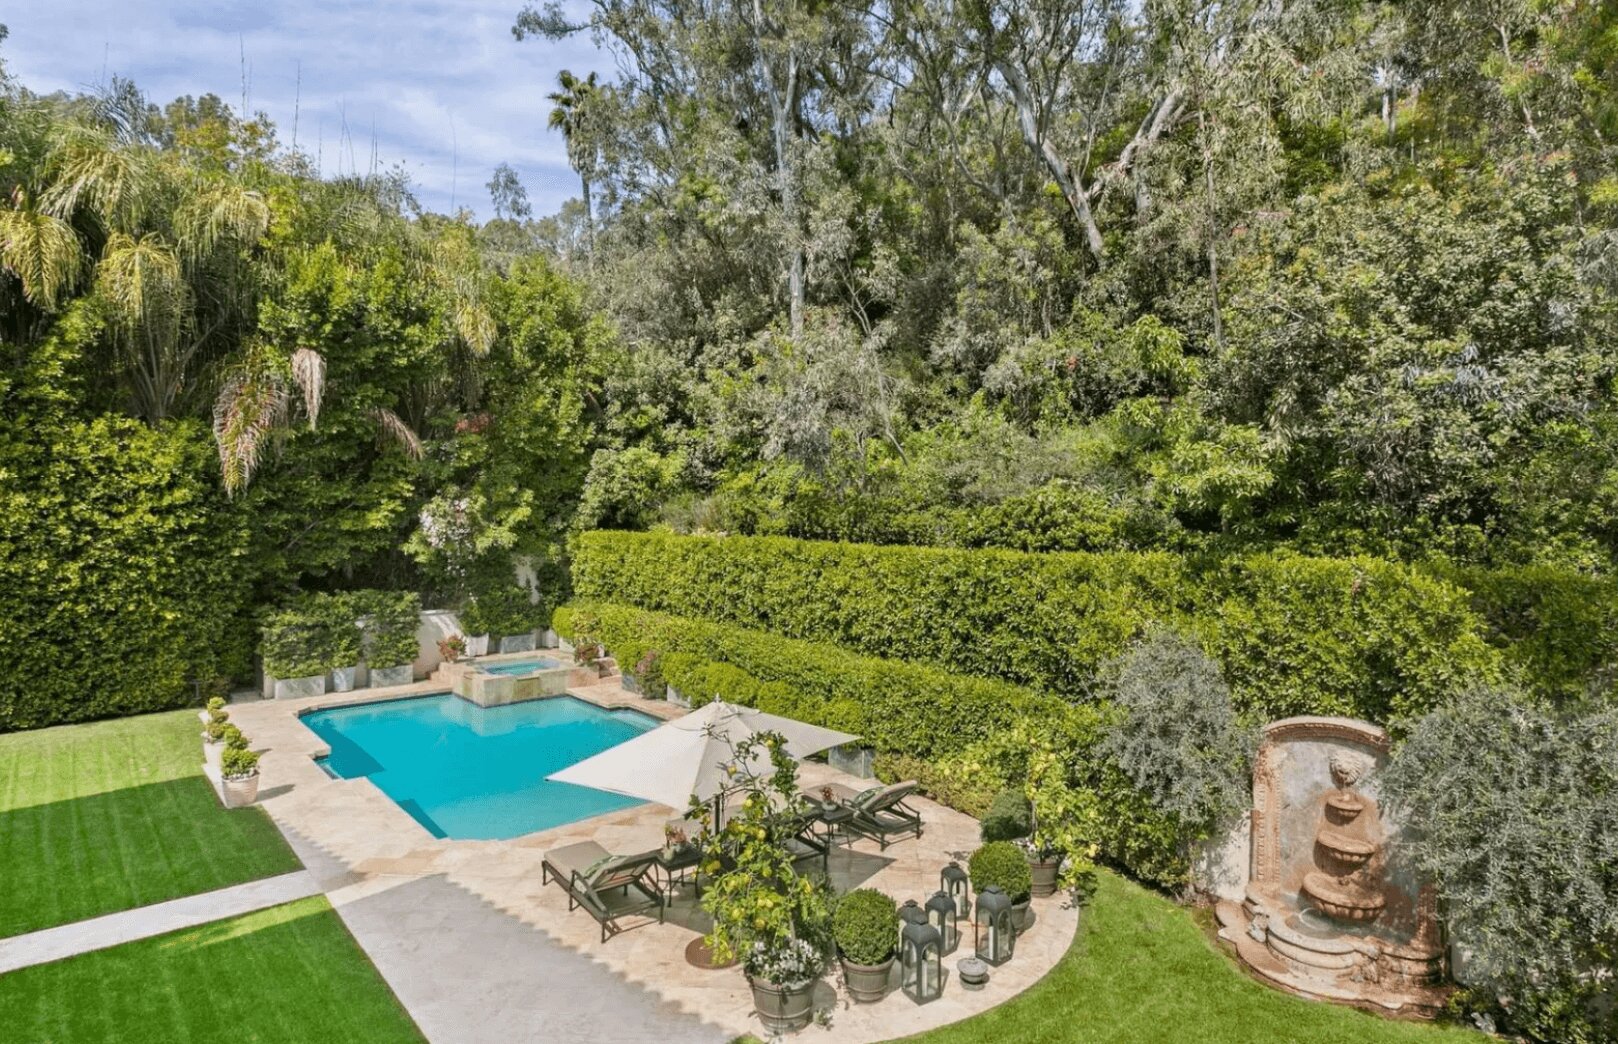 Sofia Vergara Beverly Hills Home